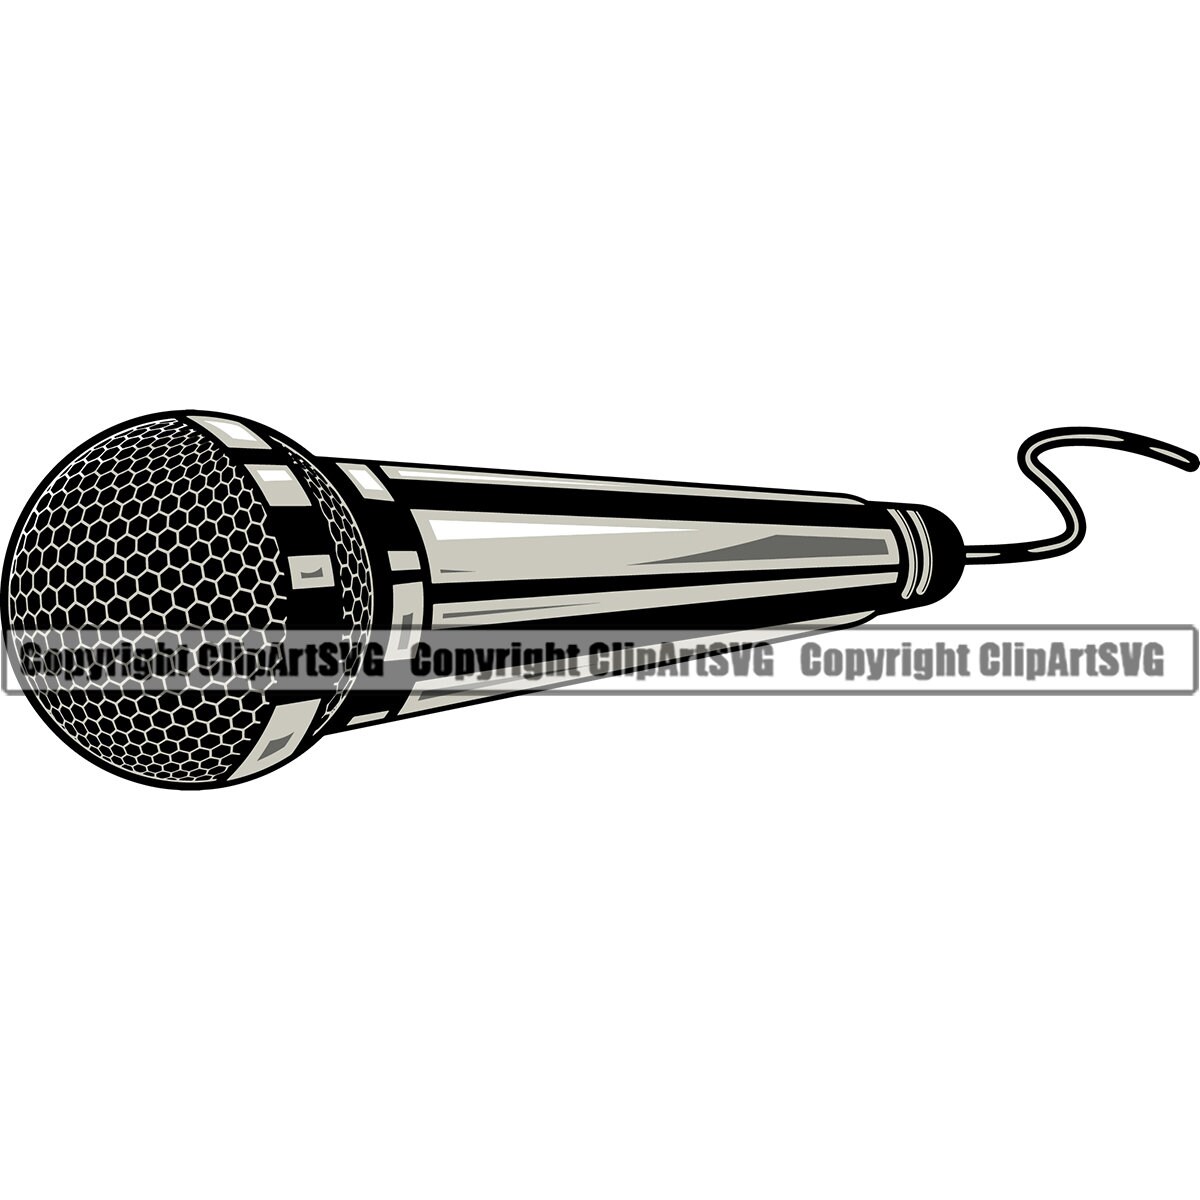 Microphone design ancien 